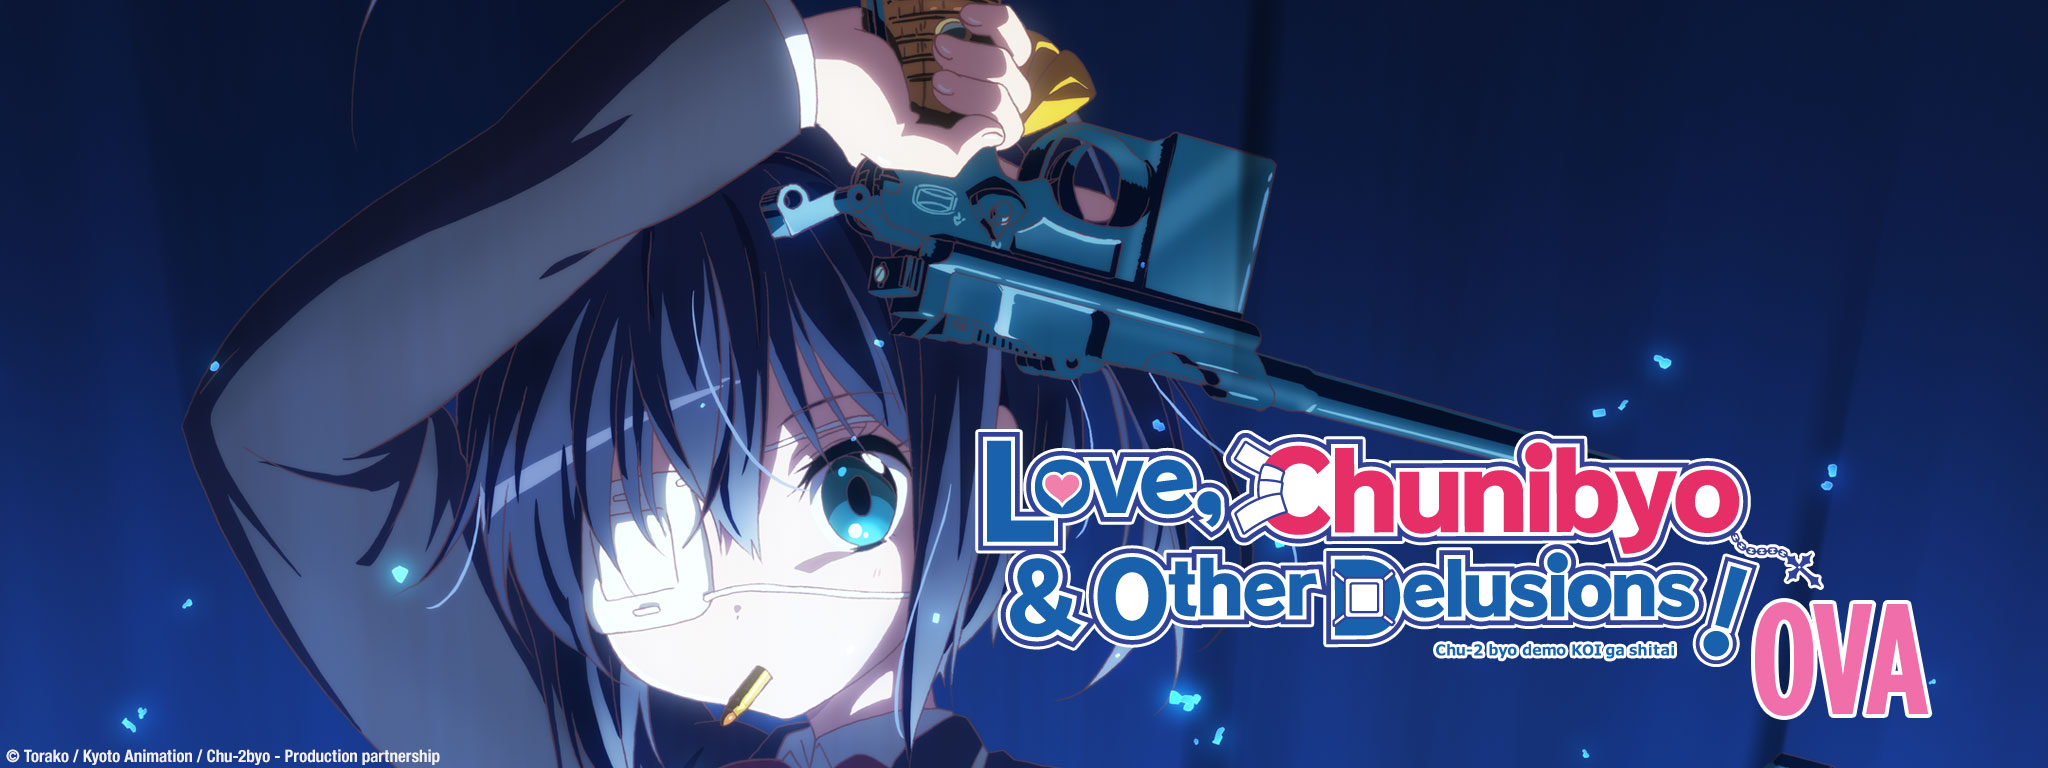 DVD Anime Love, Chunibyo & Other Delusions! Season 1+2 +2 OVA +2 Movie +26  SP